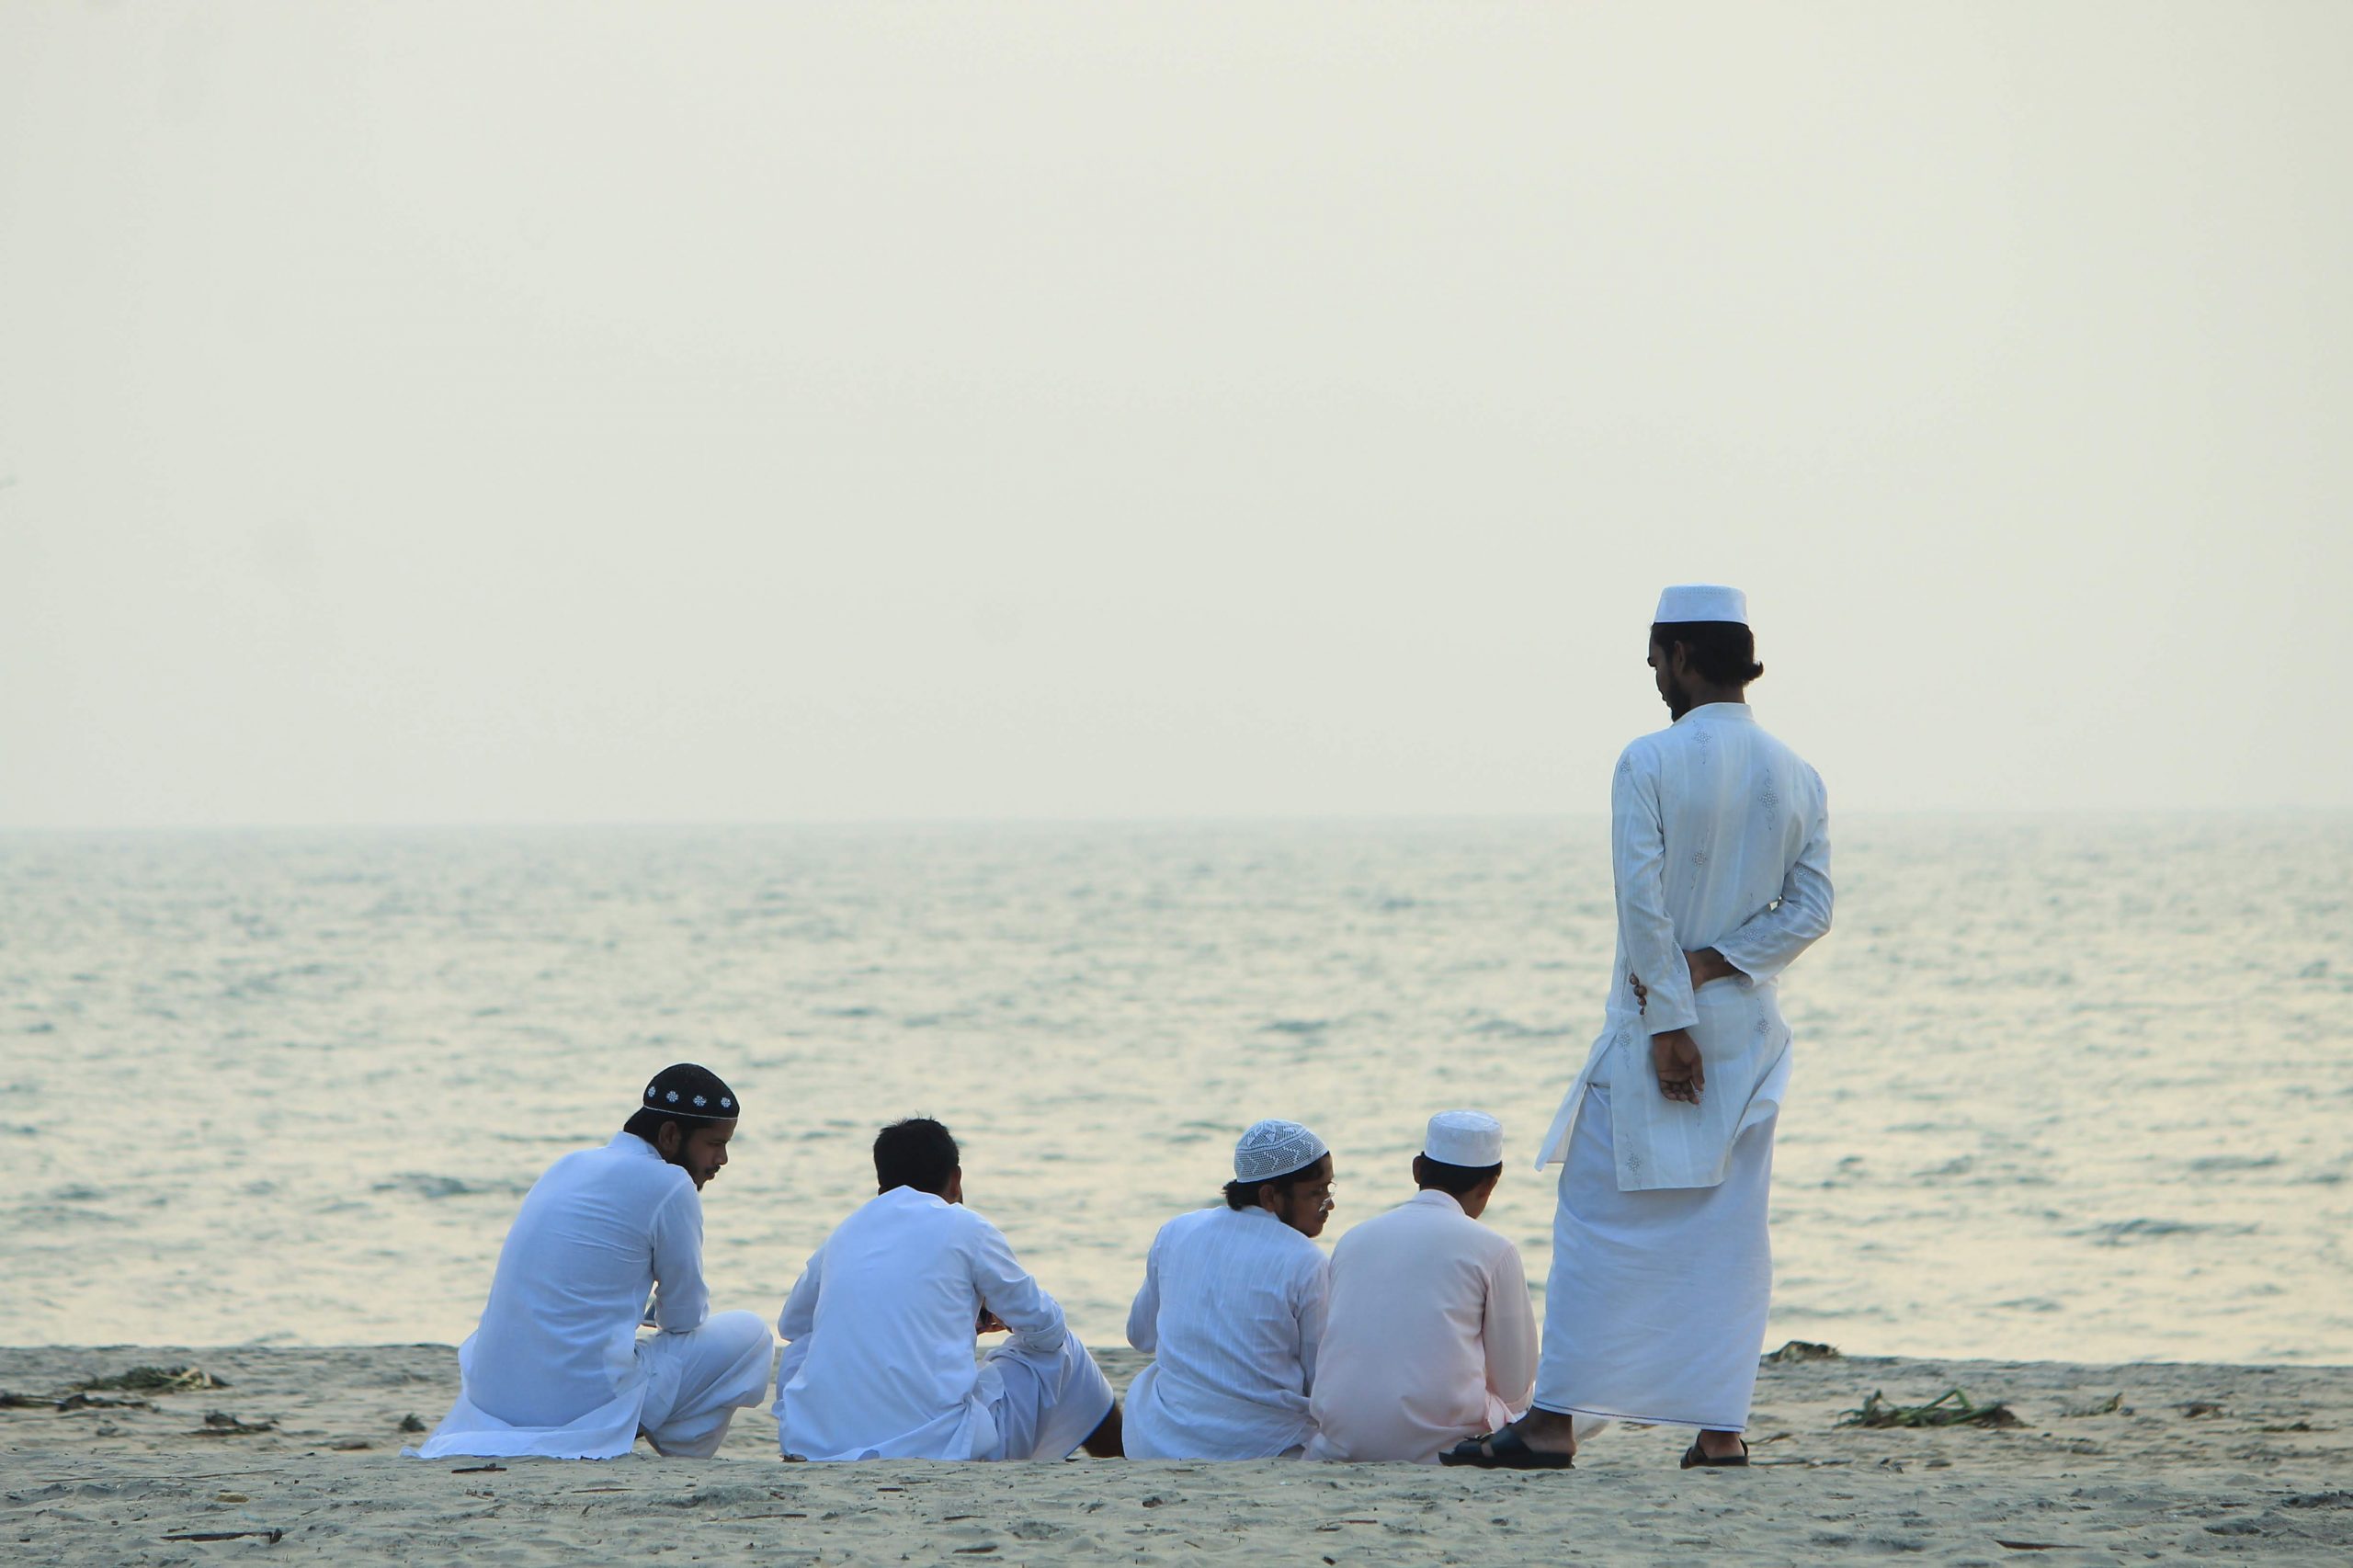 Arab Men on the Beach